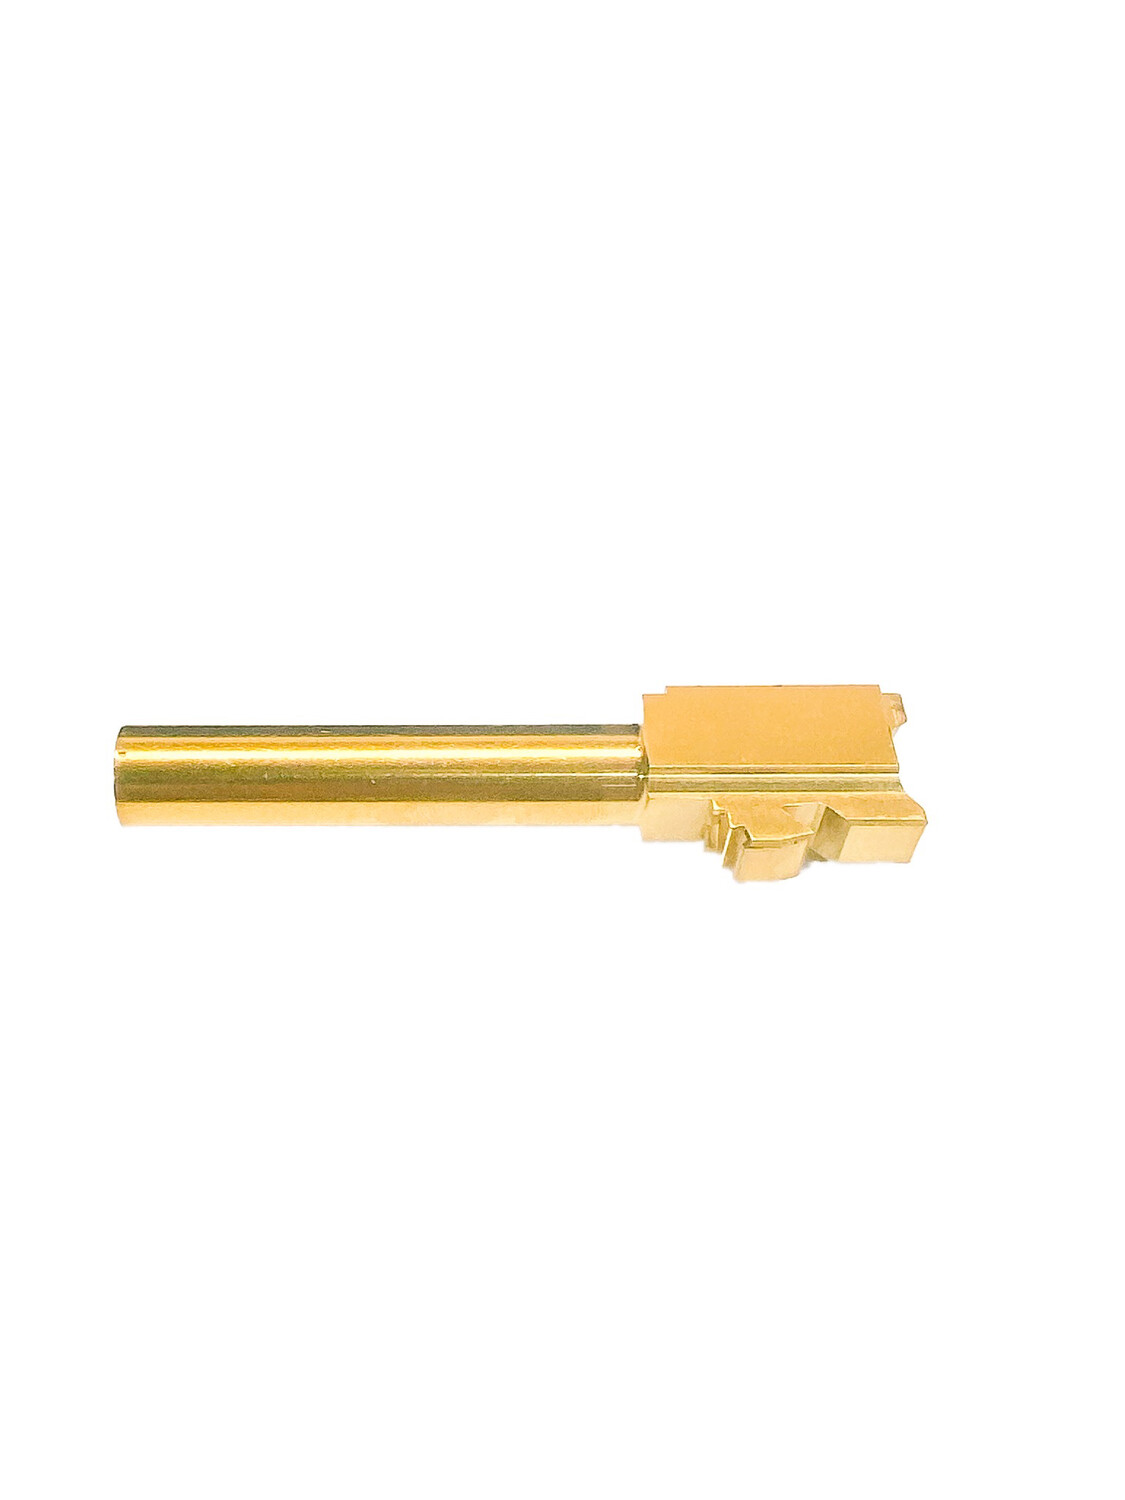 Glock 19 Highly Polished Titanium Nitrite Gold Barrels